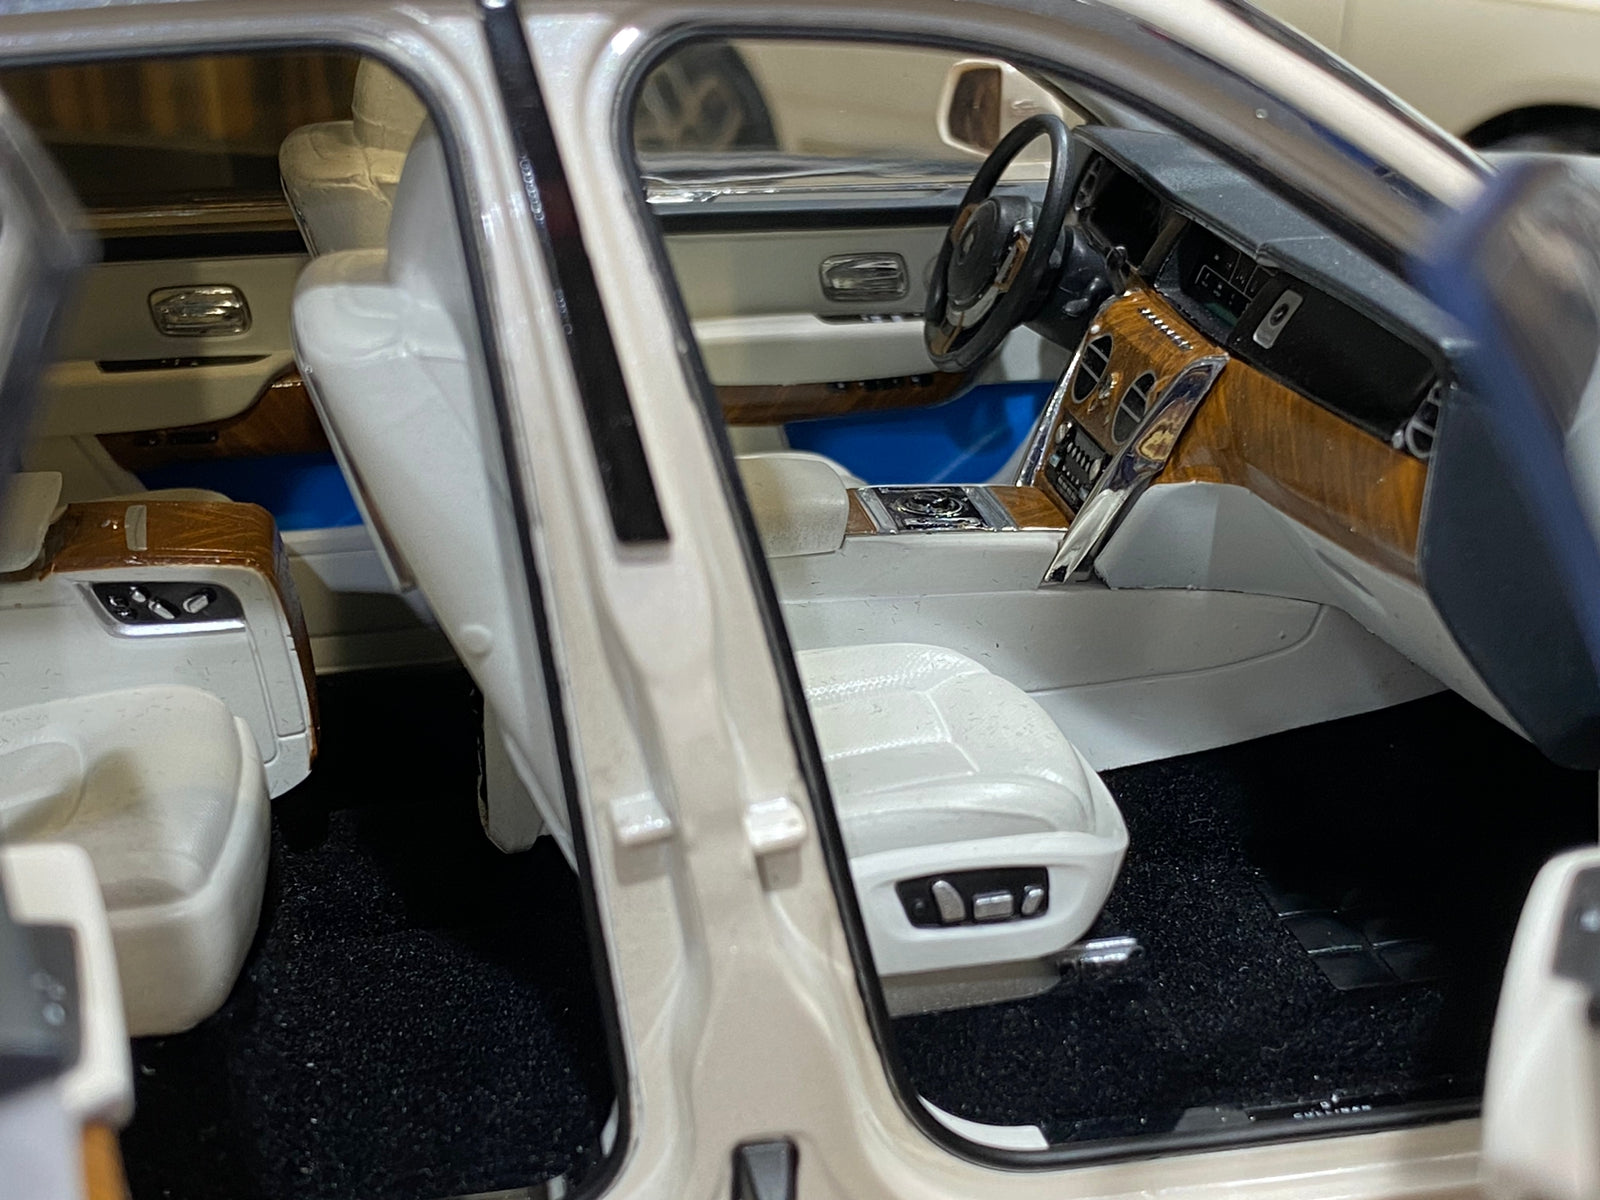 1/18 Diecast Rolls-Royce Cullinan white & silver Kyosho Scale Model Car